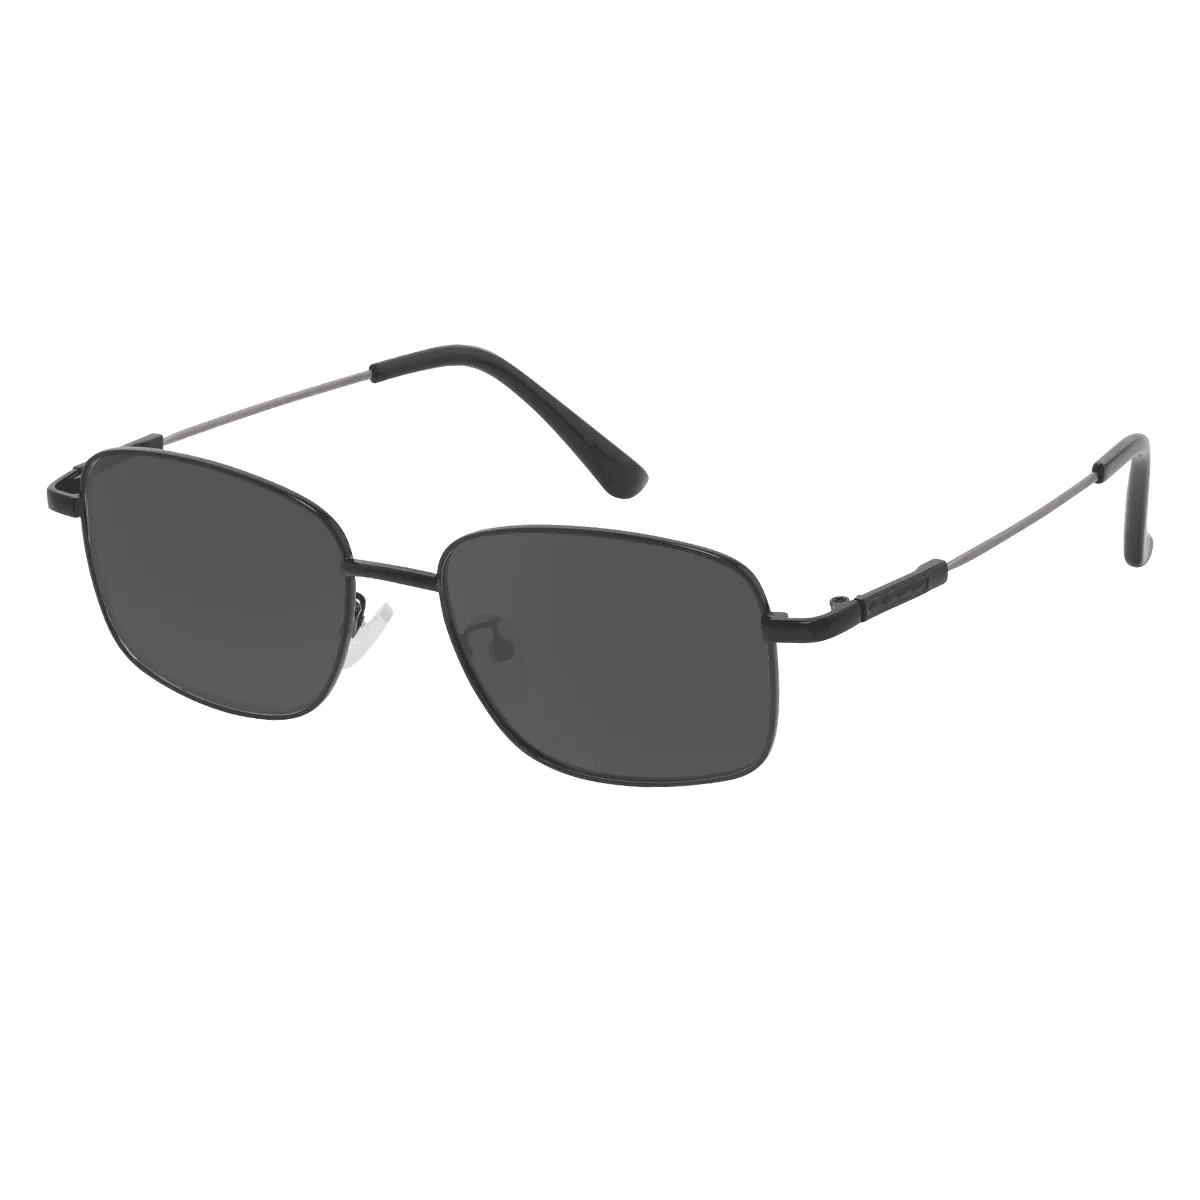 Stuart - Rectangle Black Sunglasses for Men